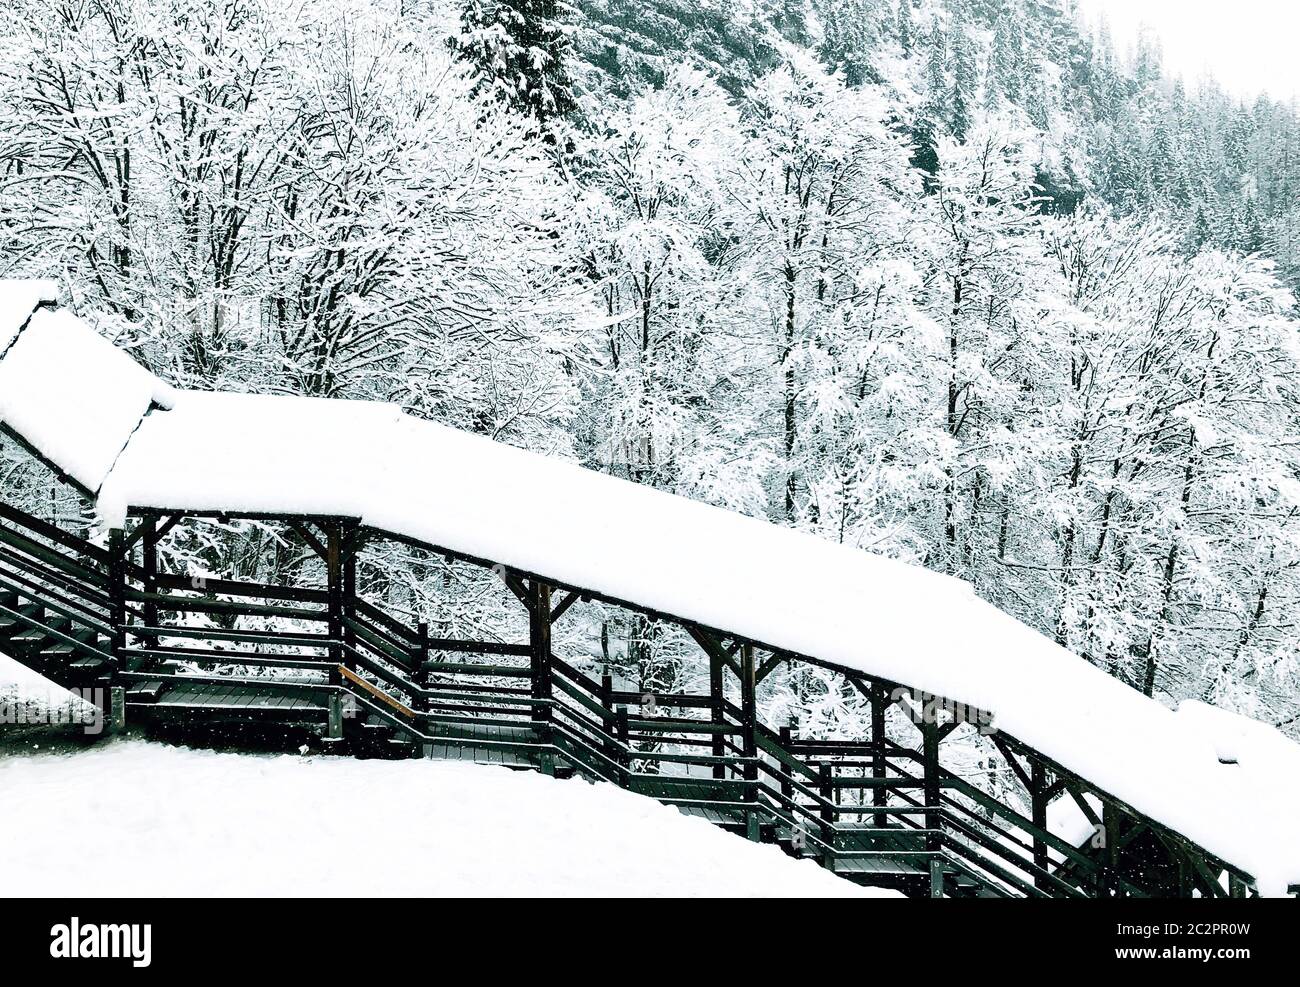 The bridge at old salt mine of Hallstatt Winter snow mountain landscape the pine forest in snowy day, Austria Stock Photo